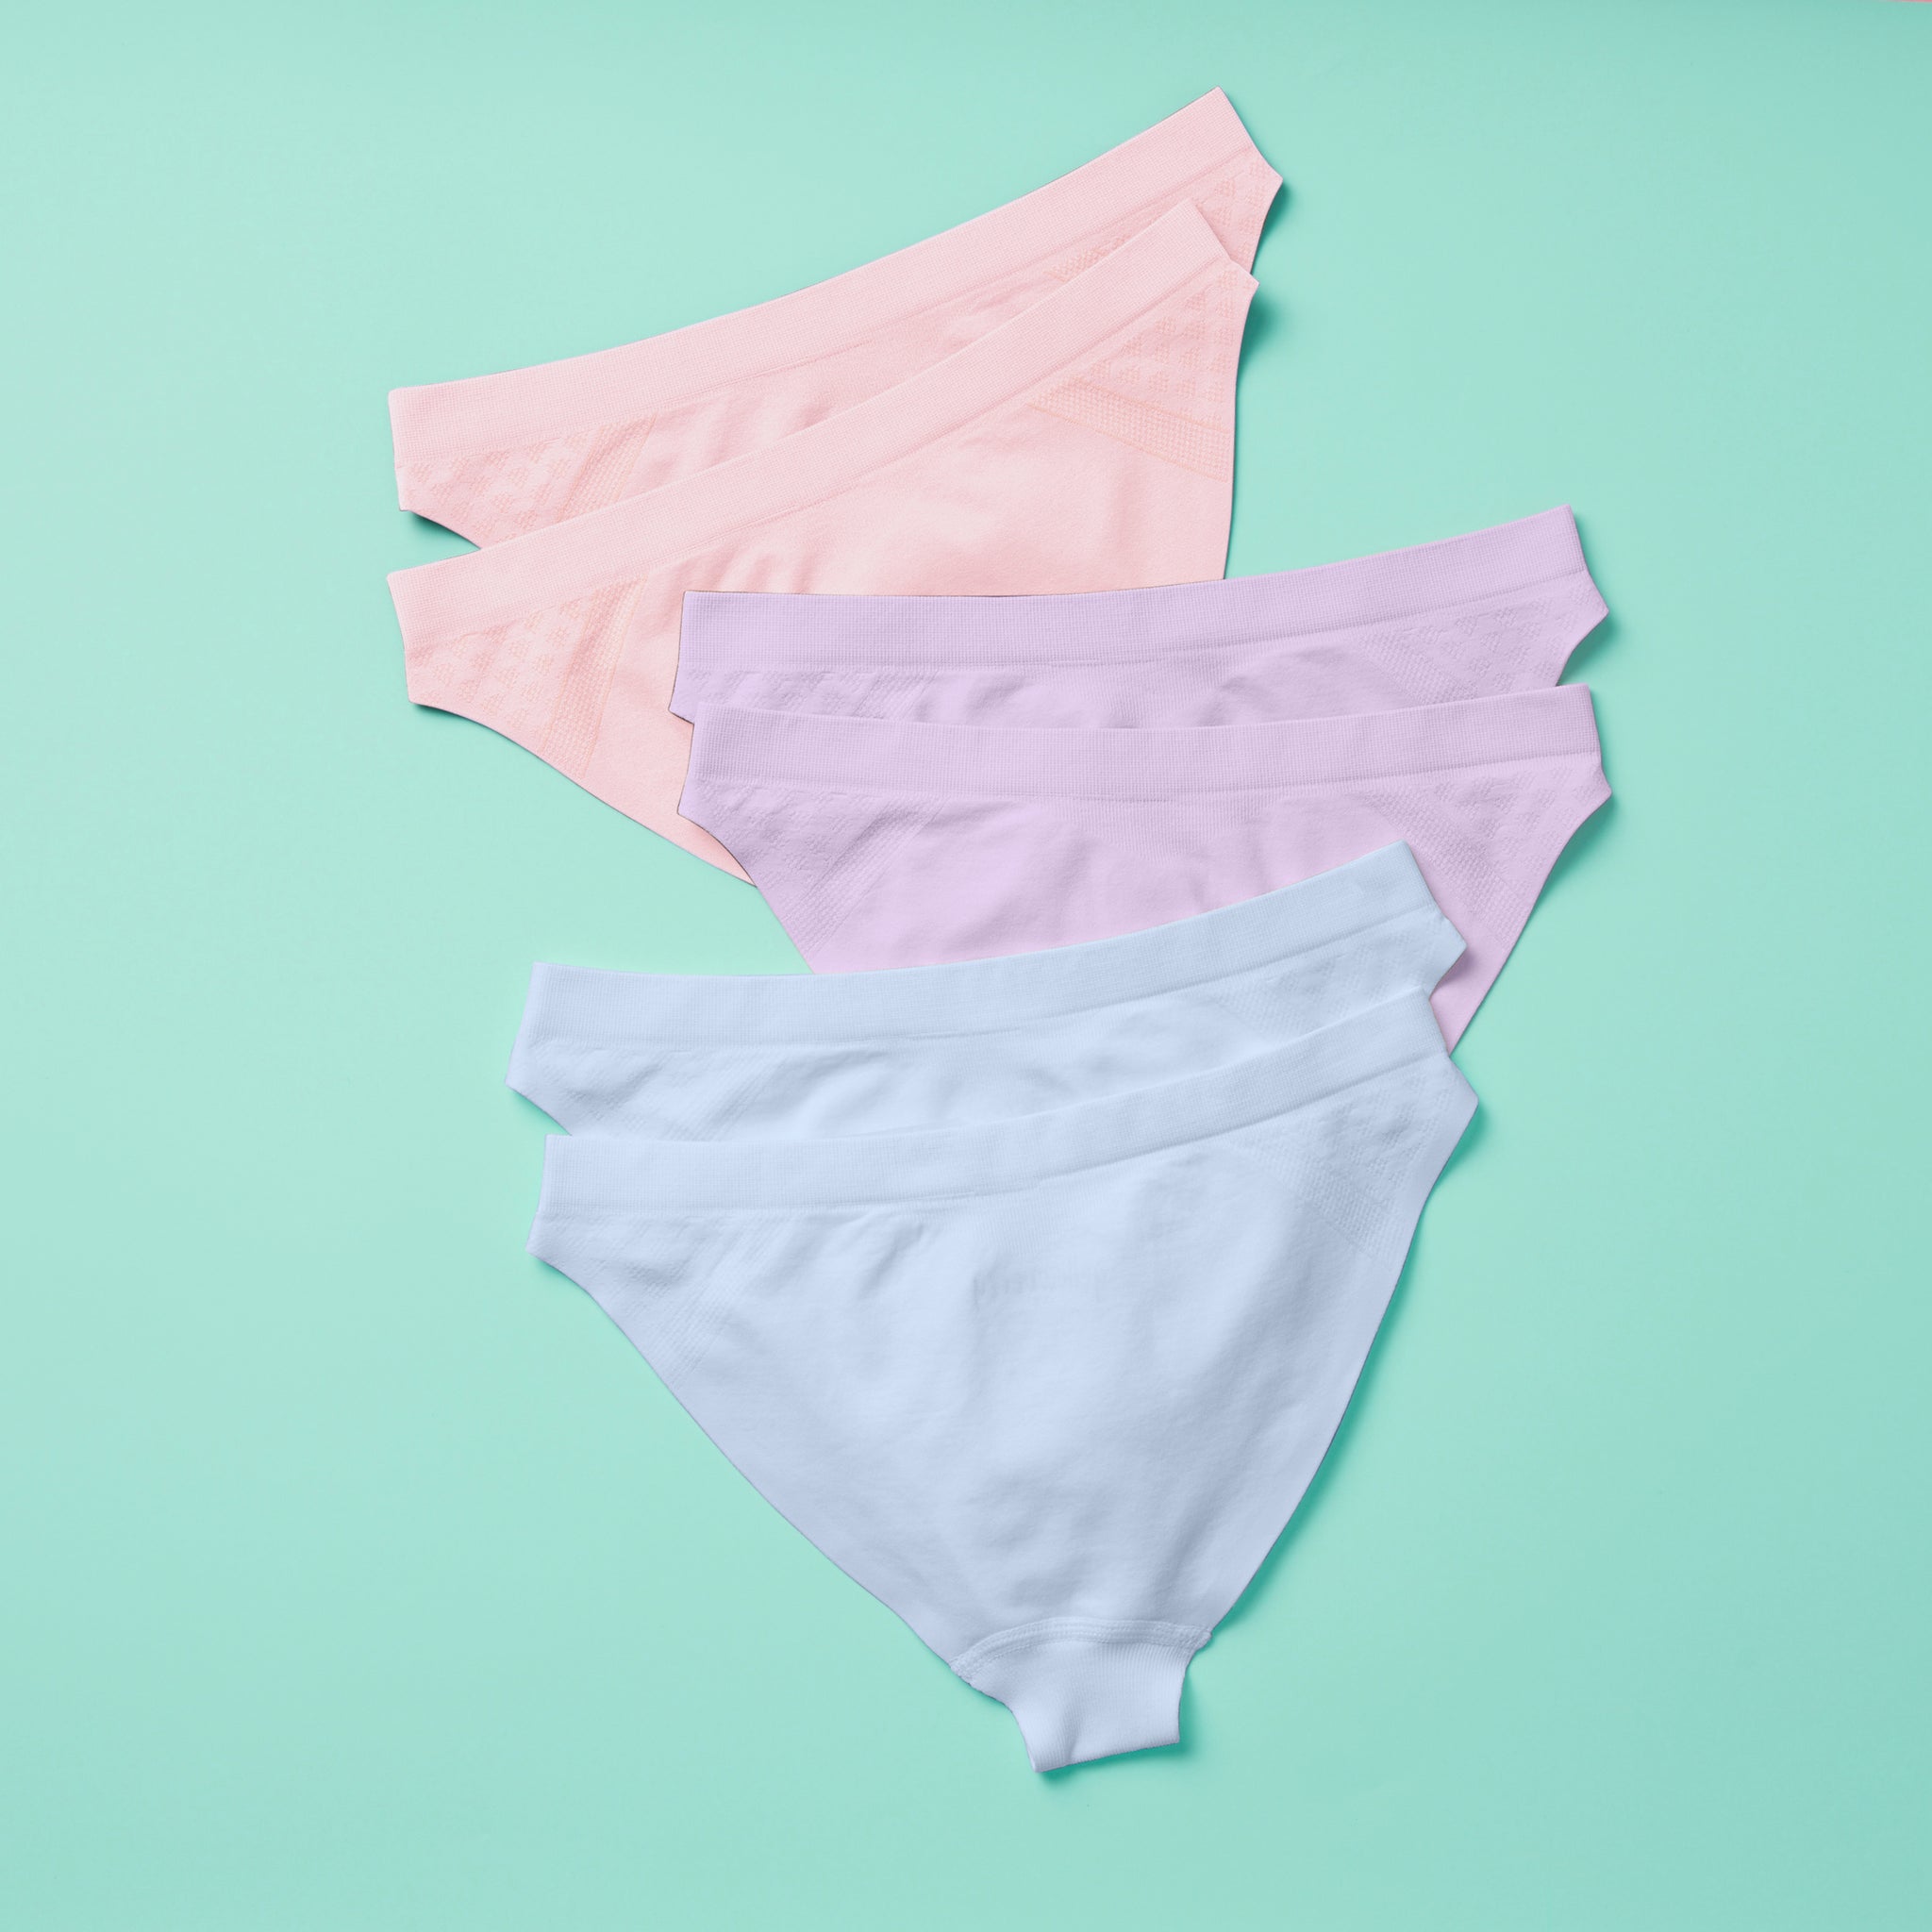 Lounge Underwear panties  TRY ON HAUL : r/_startups